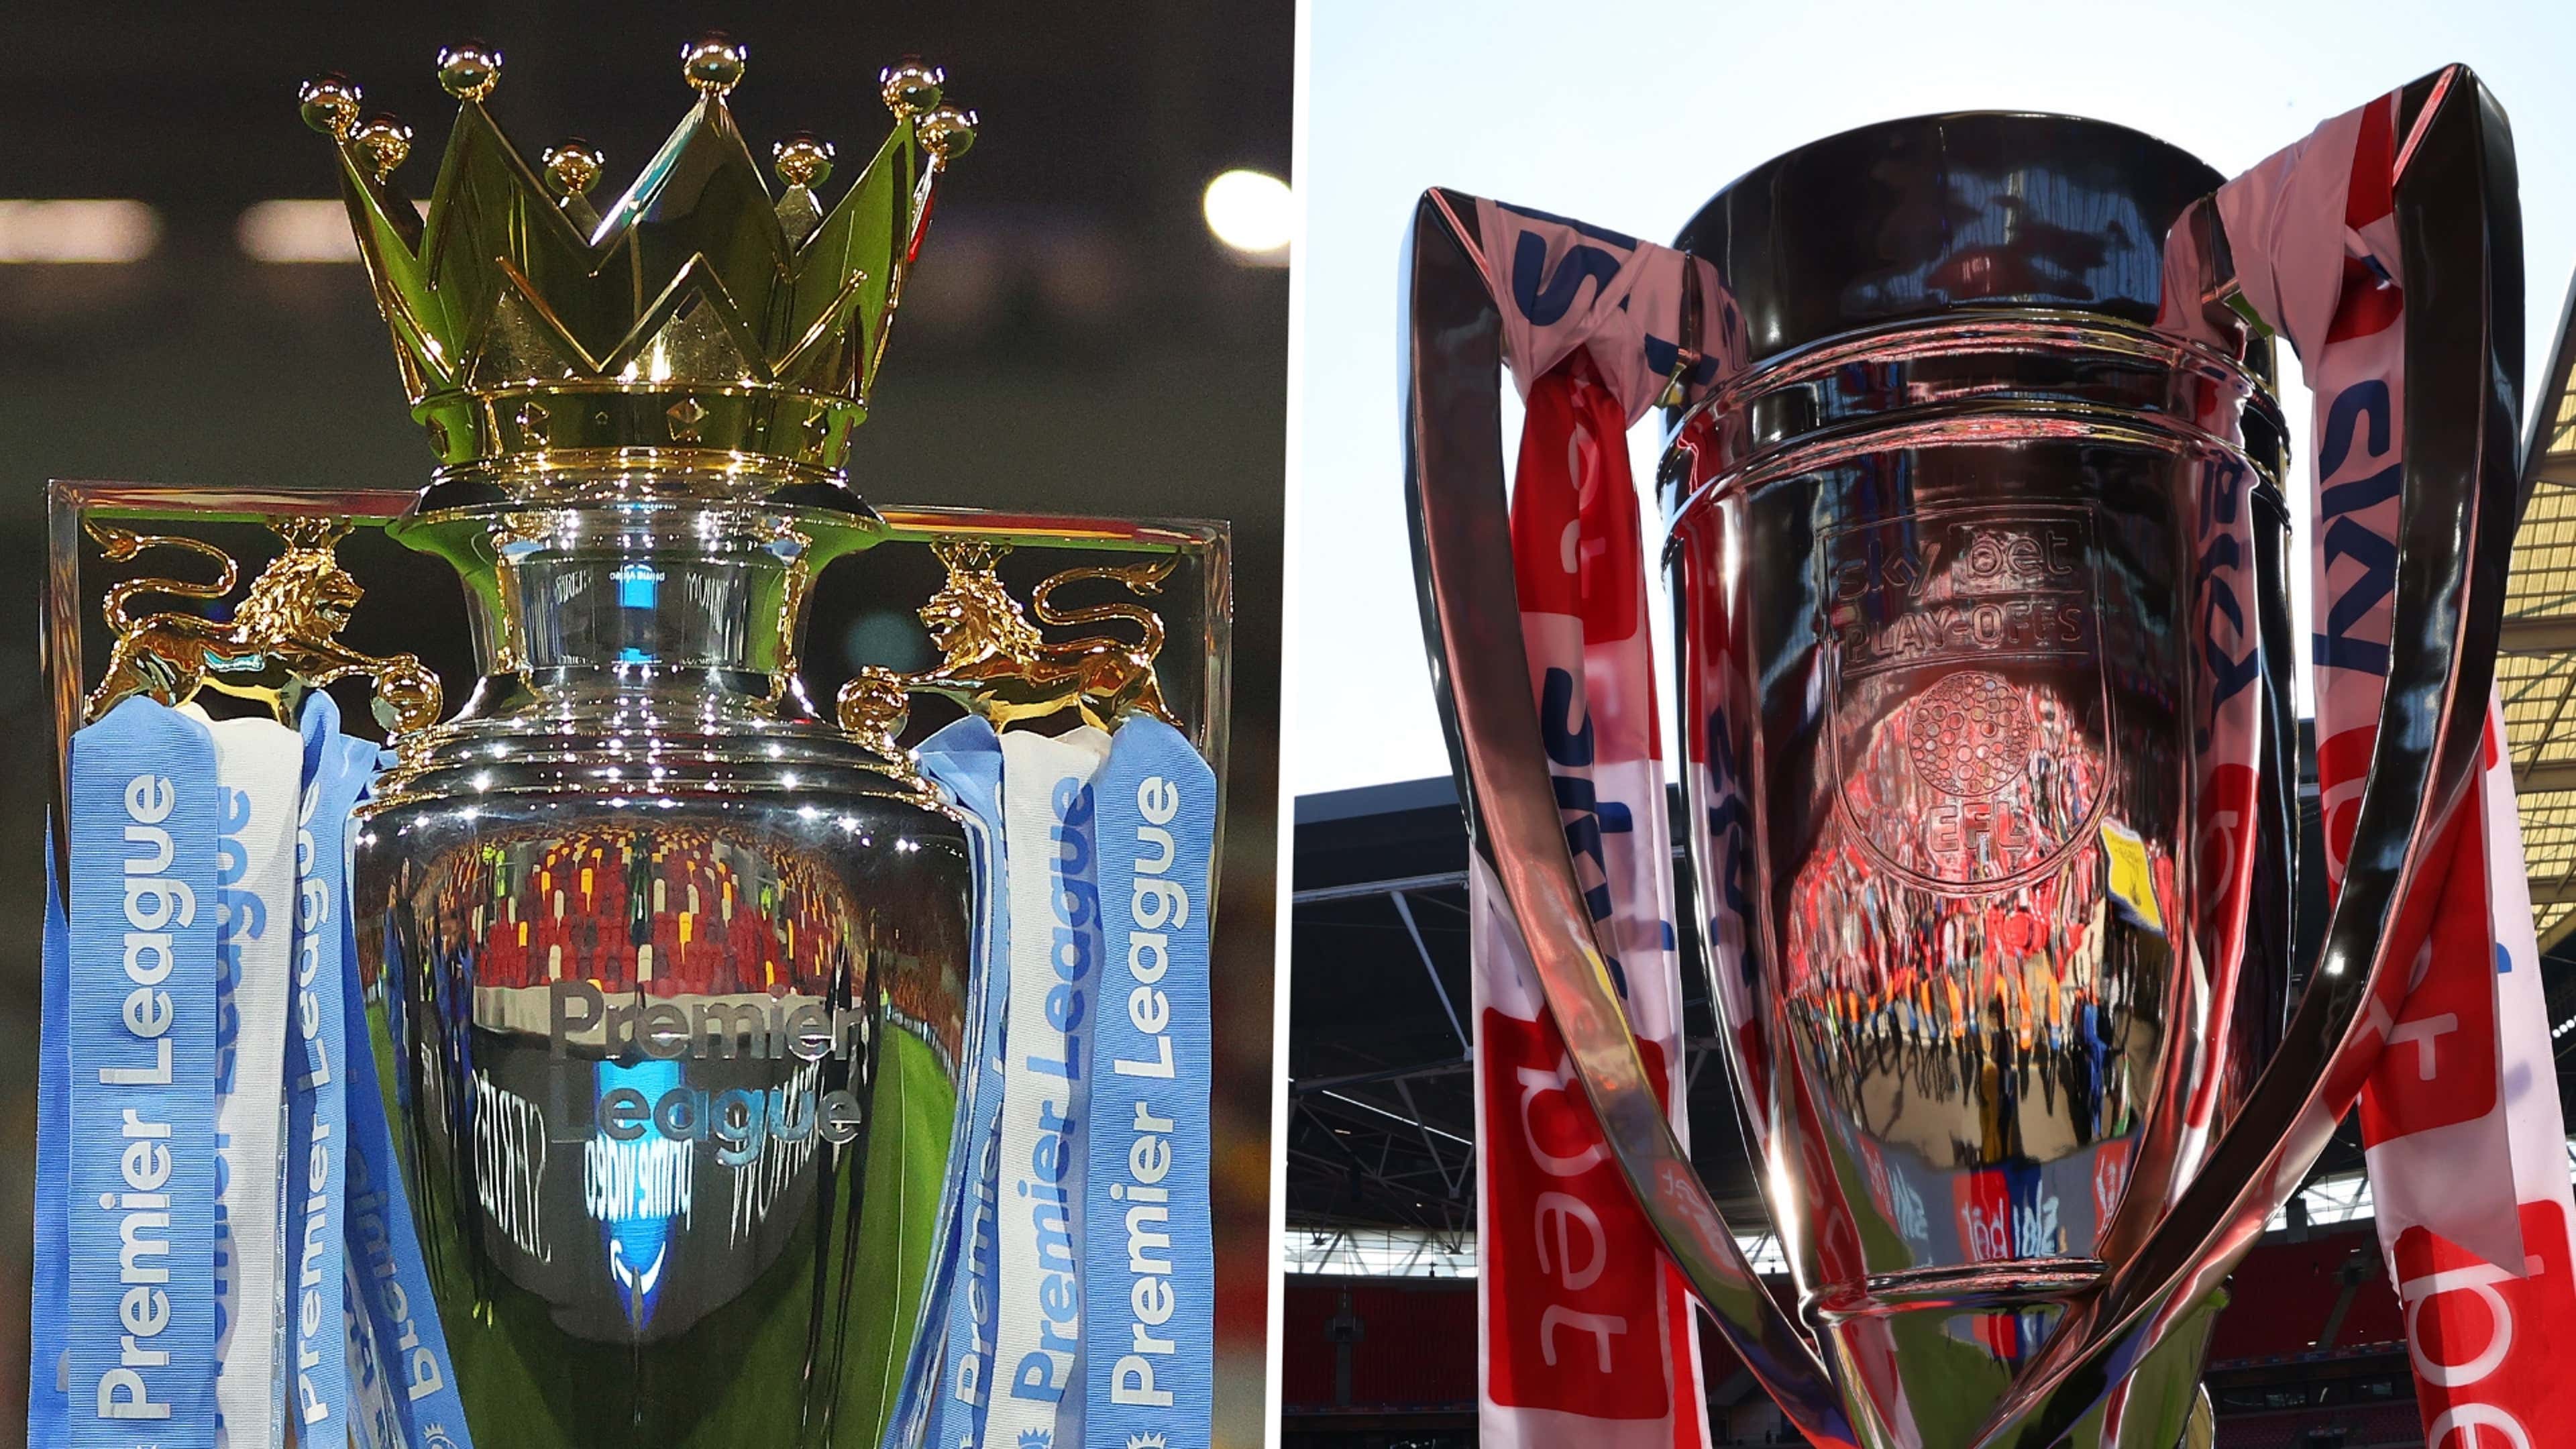 English Premier League dominates European tournaments in Deloitte